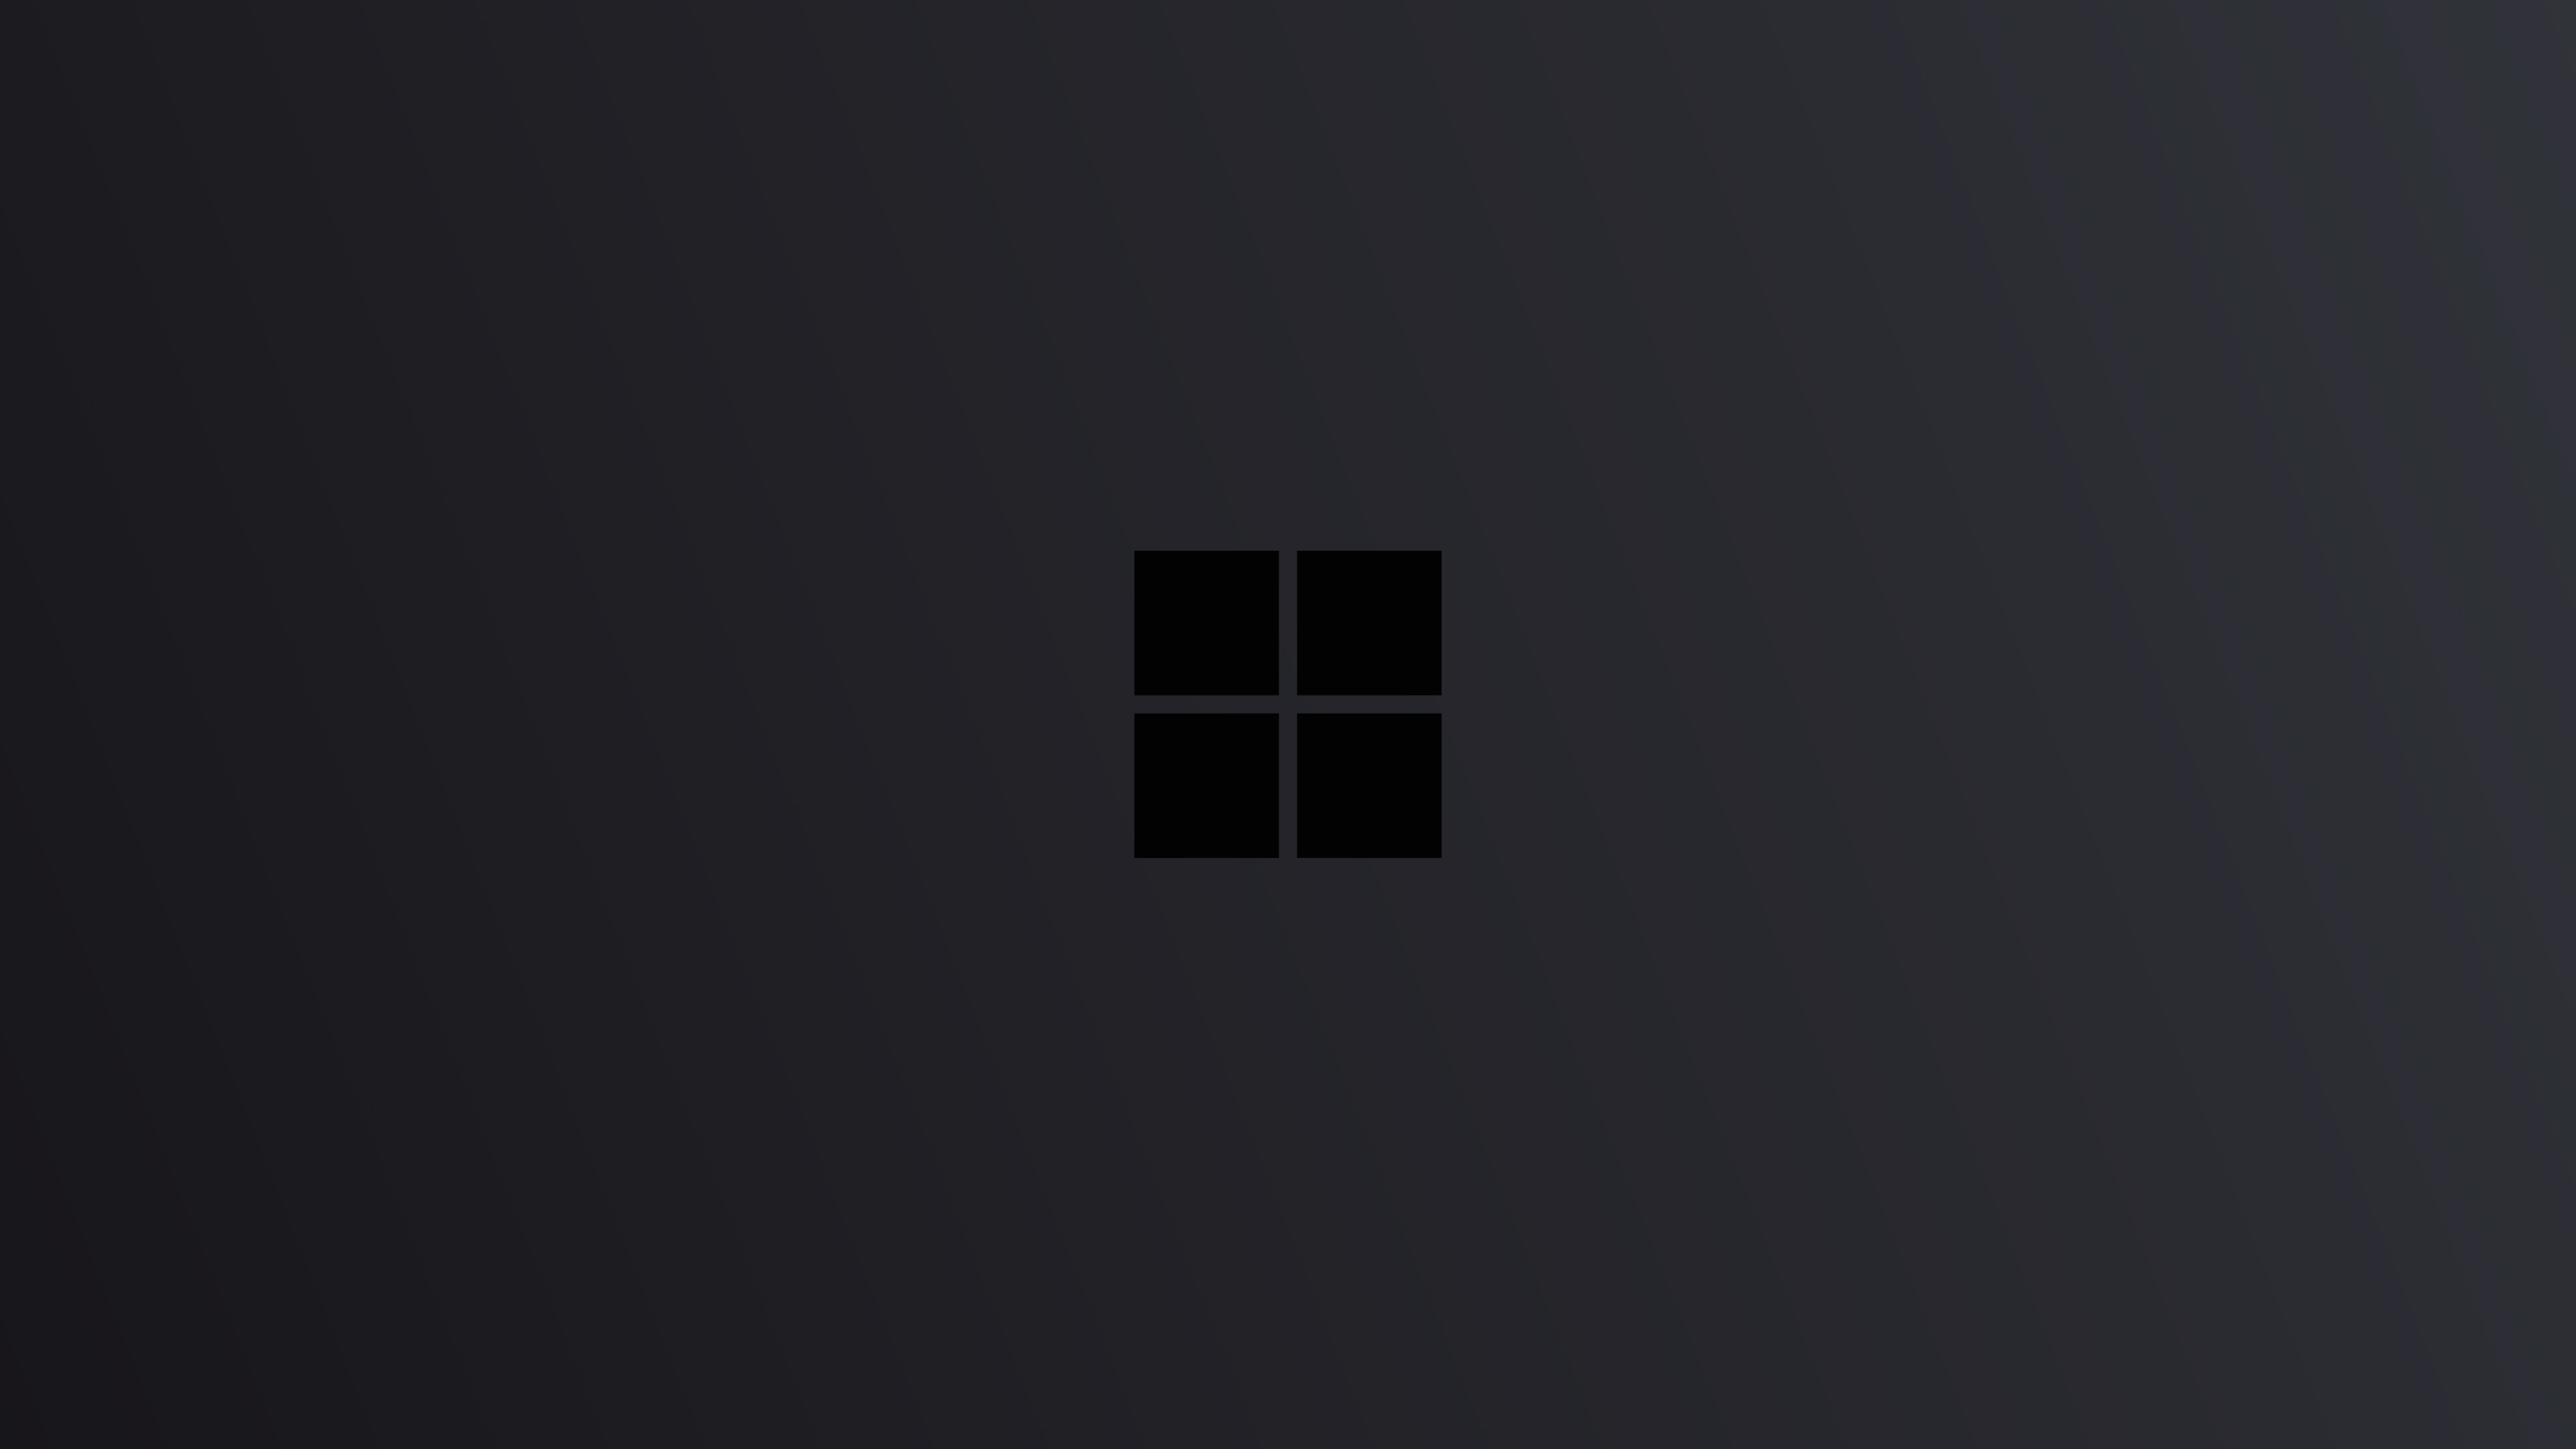 7680x4320 Windows 10 Logo Minimal Dark 8K Wallpaper, HD Minimalist 4K  Wallpapers, Images, Photos and Background - Wallpapers Den